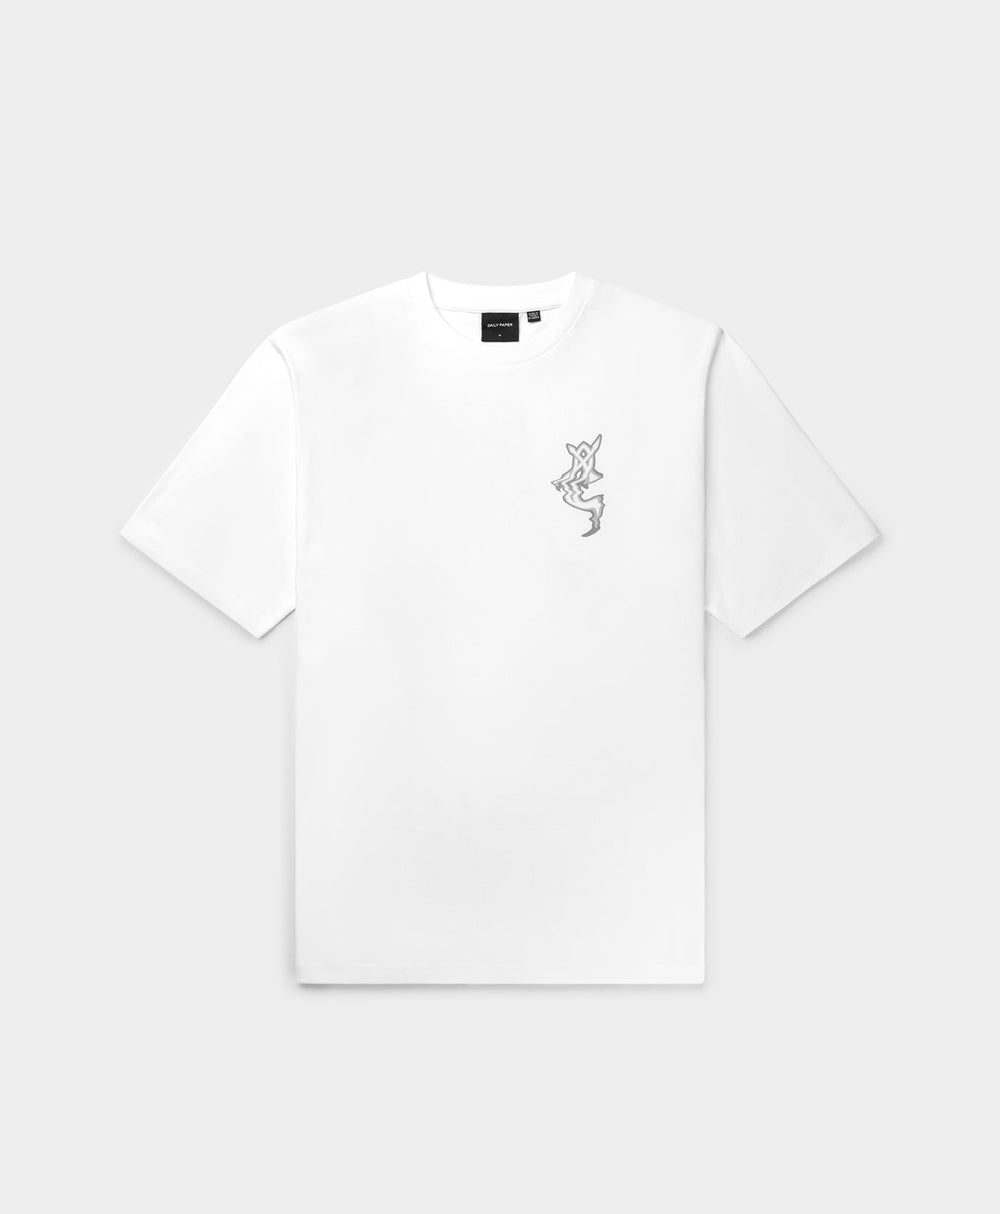 DP - White Reflection T-Shirt - Packshot - Rear